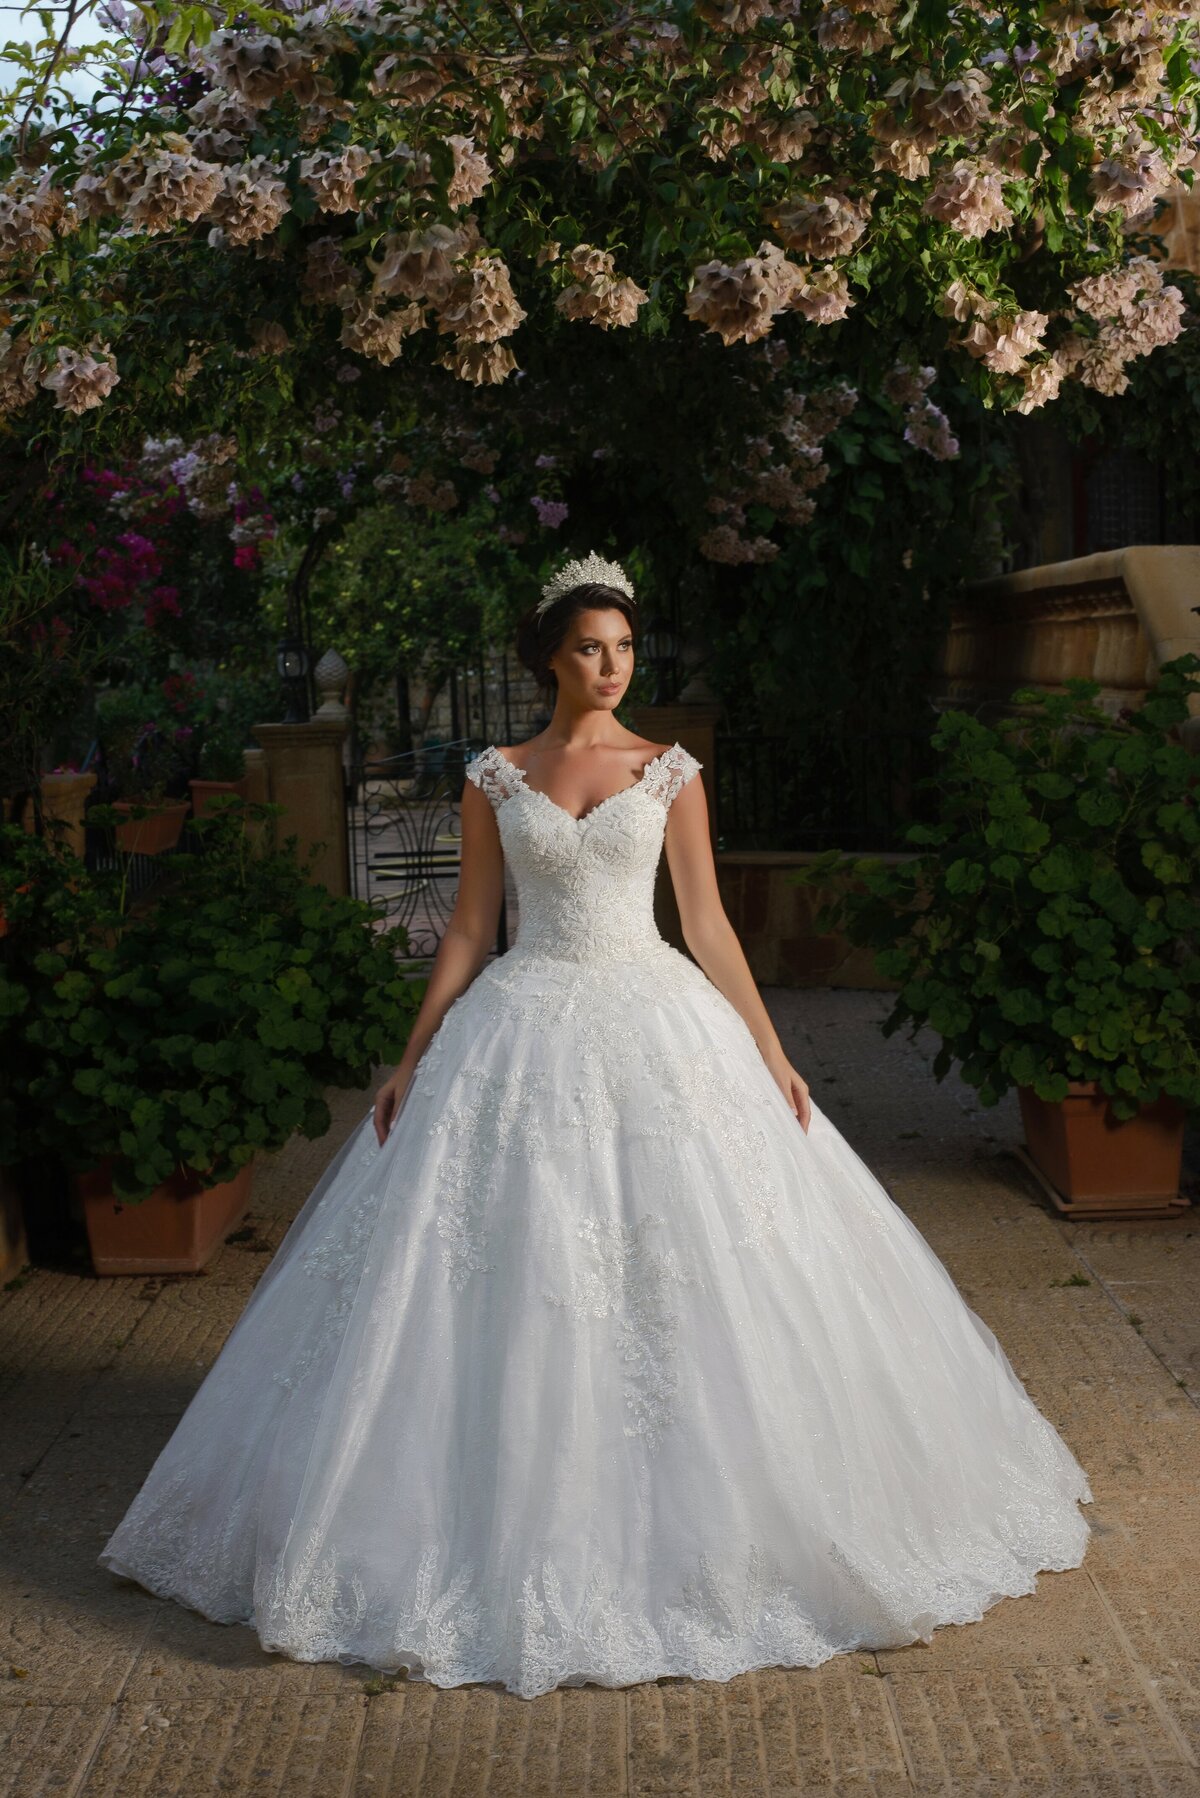 Model posing in wedding dress